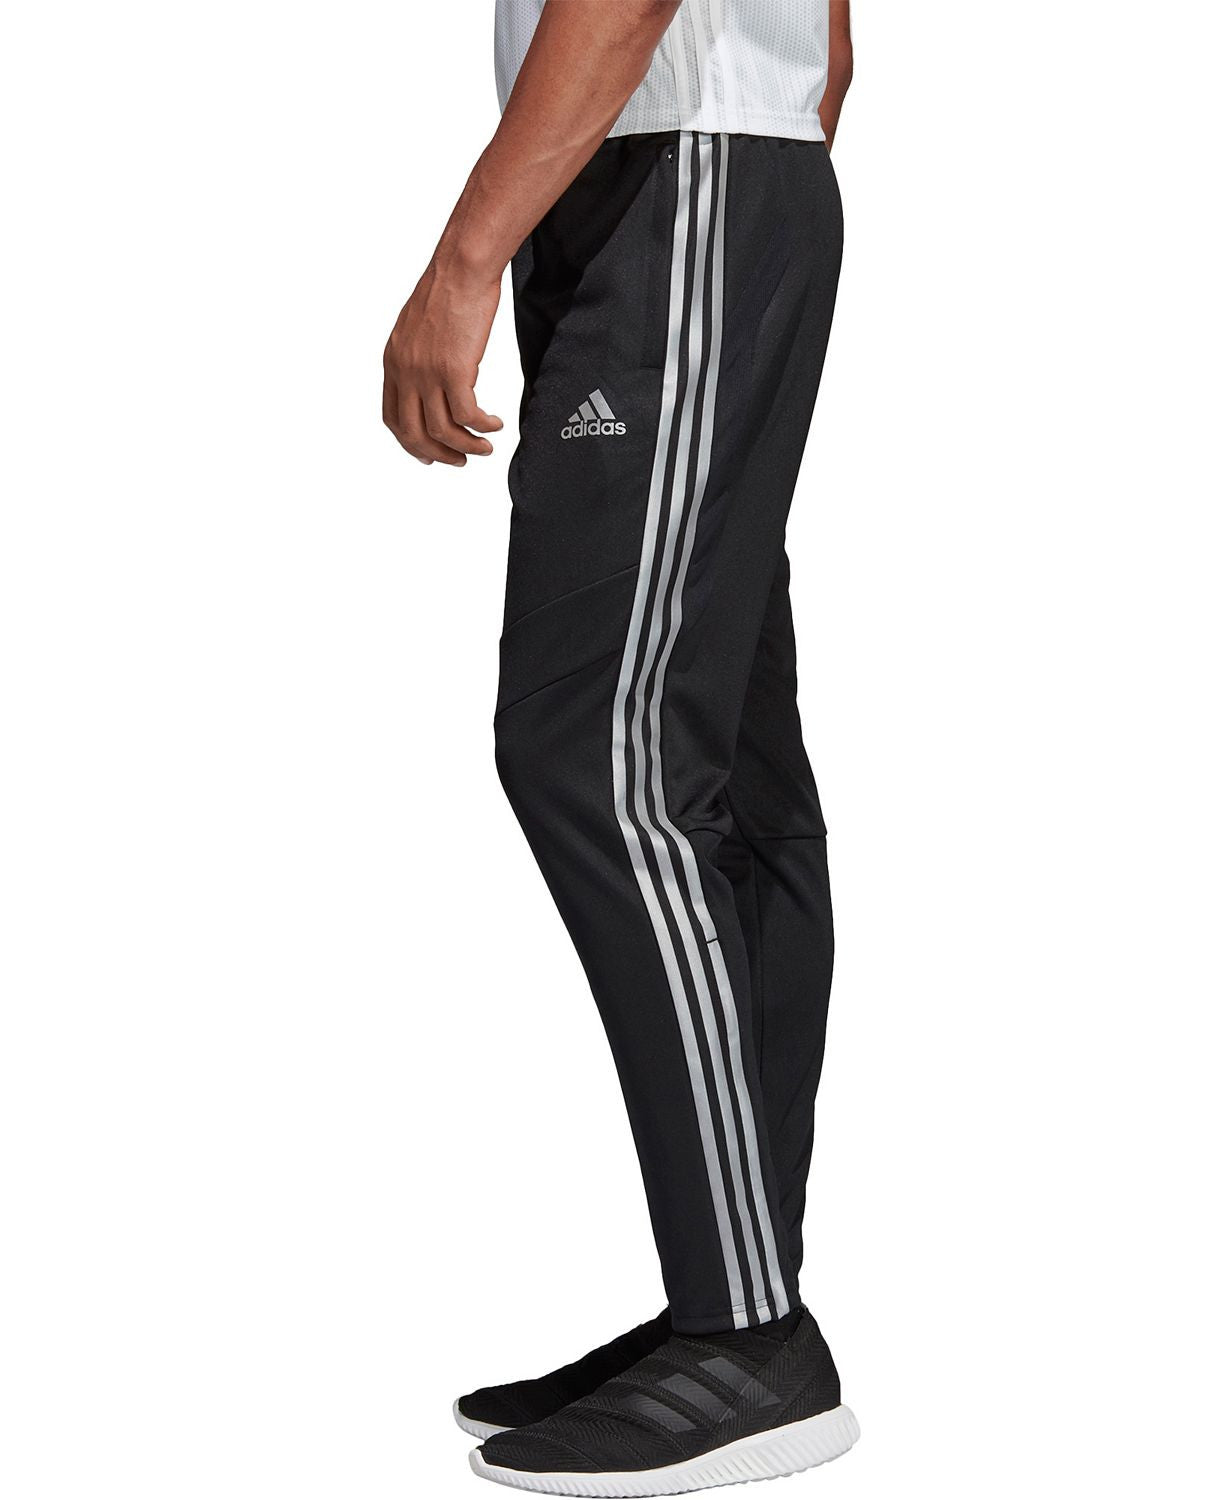 Adidas Metallic Tiro 19 Training Pants